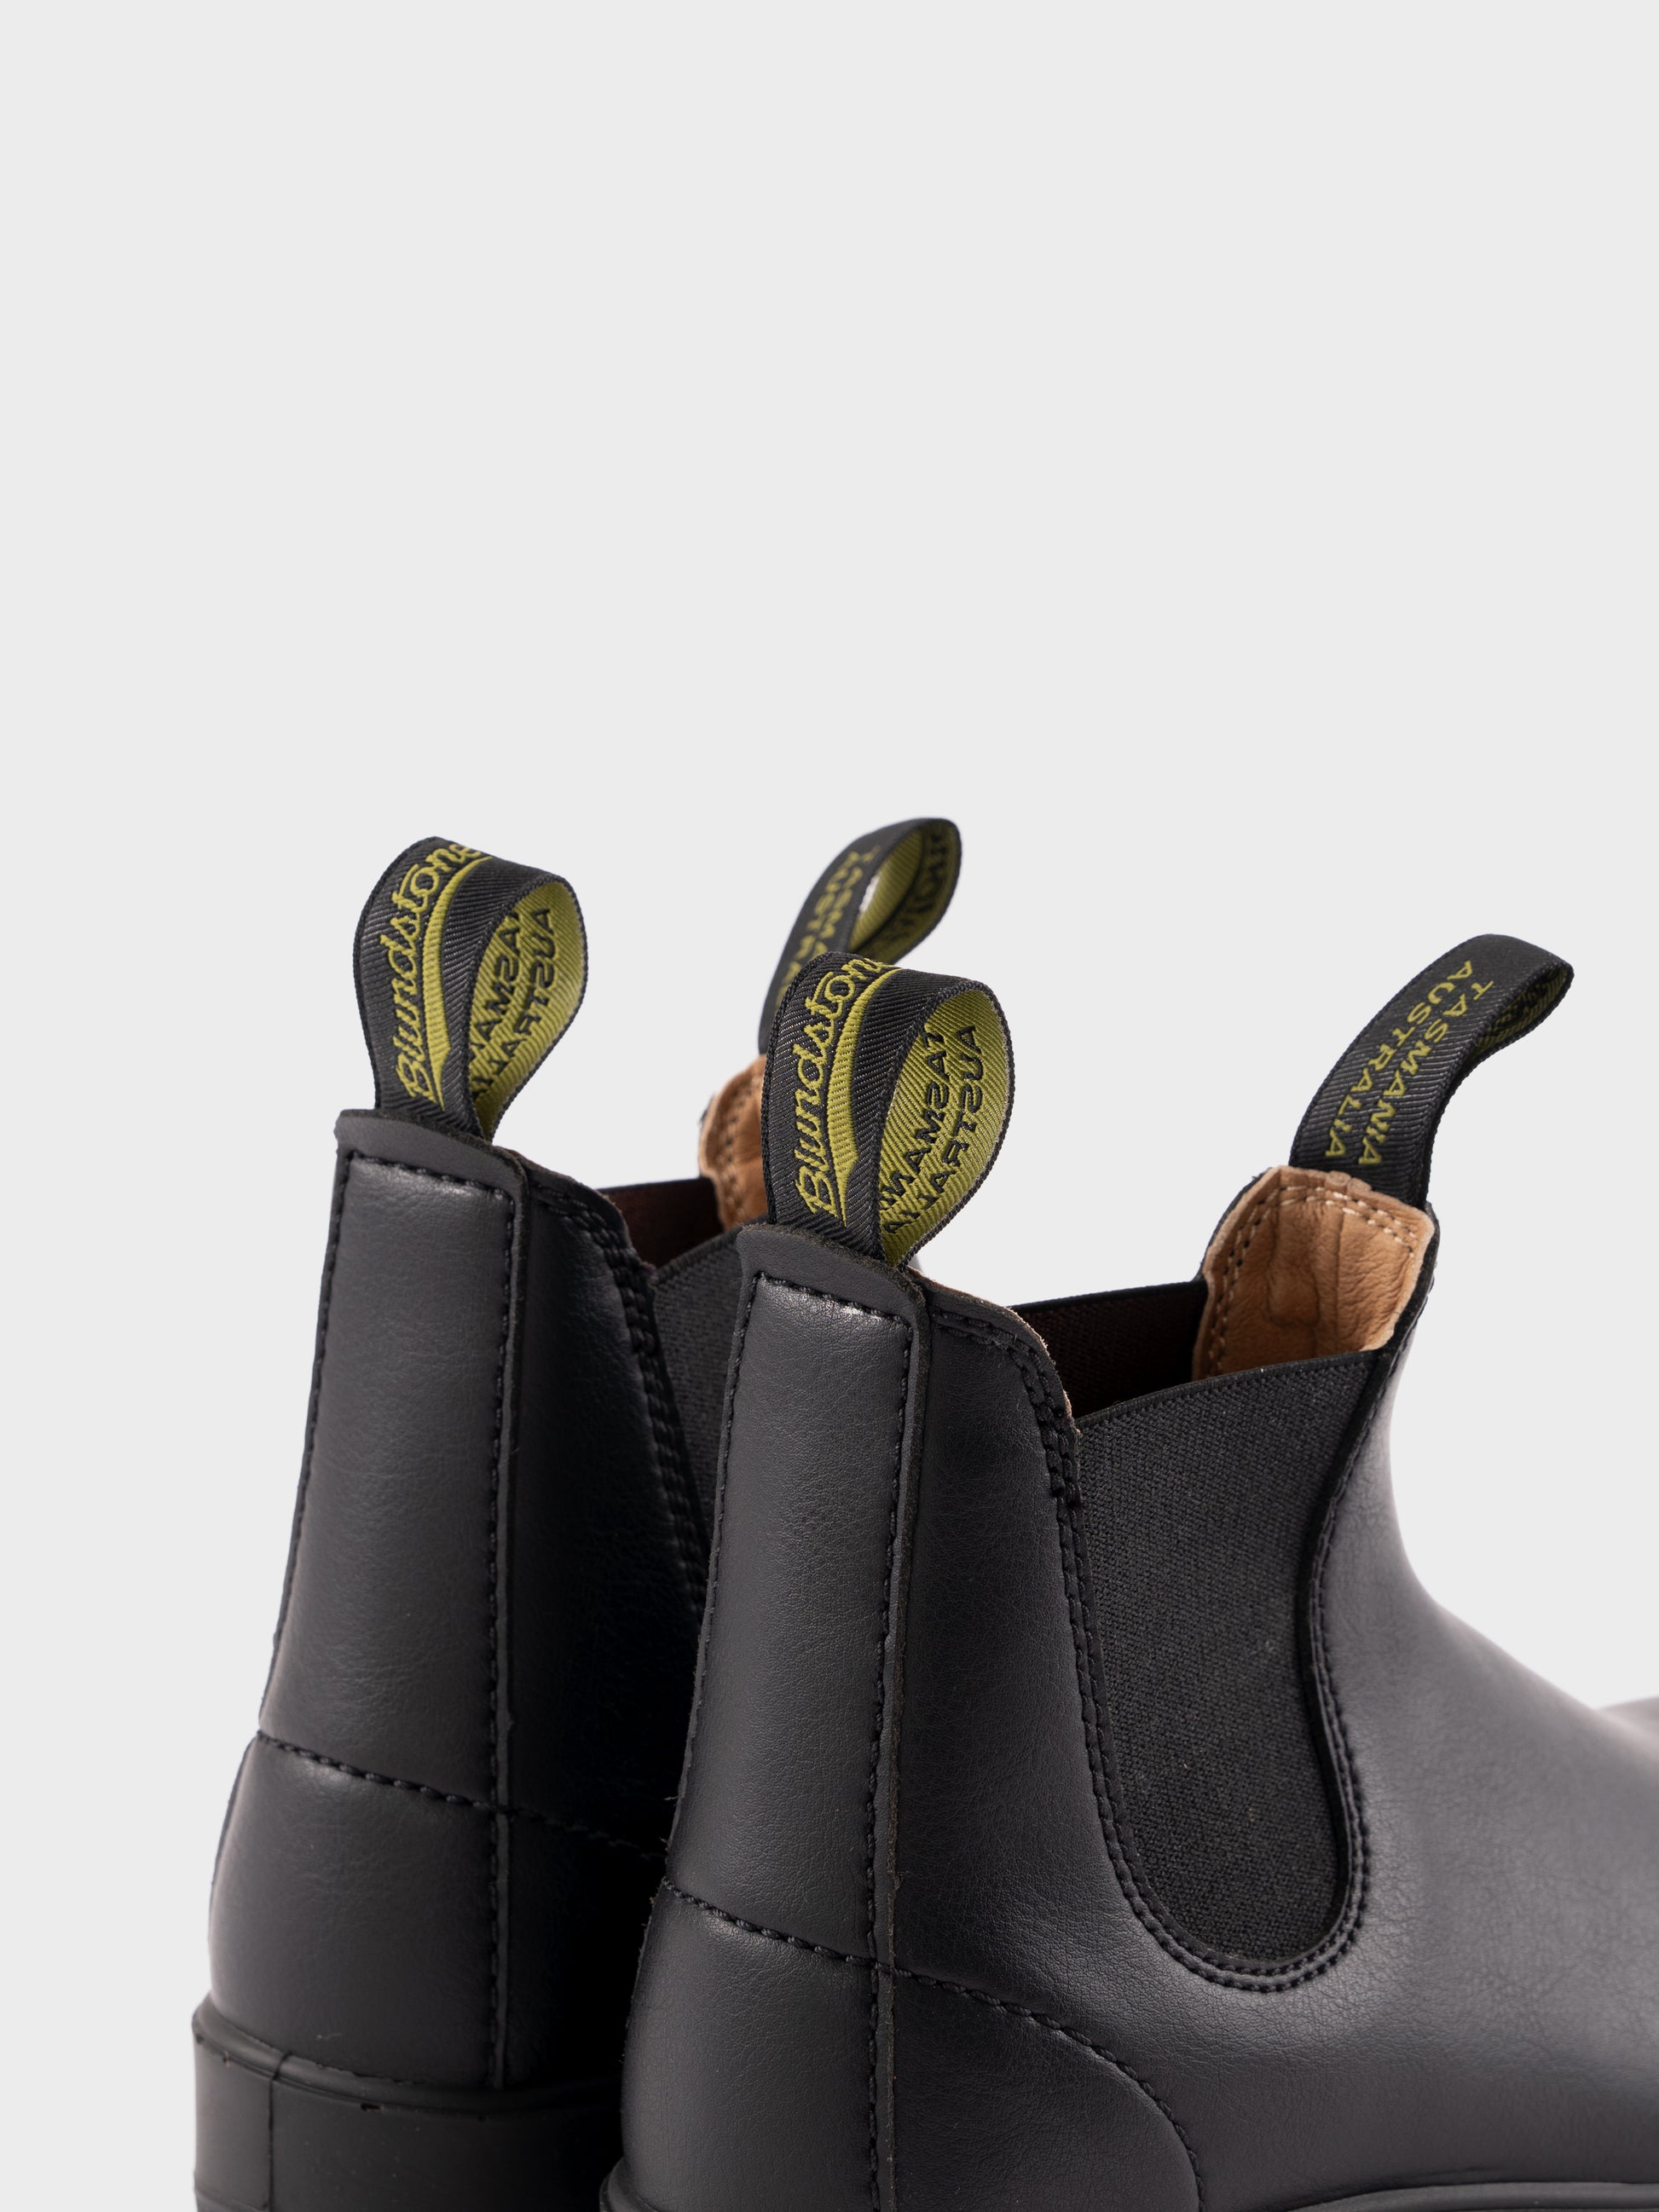 Blundstone Boots - 2115 - Black Vegan